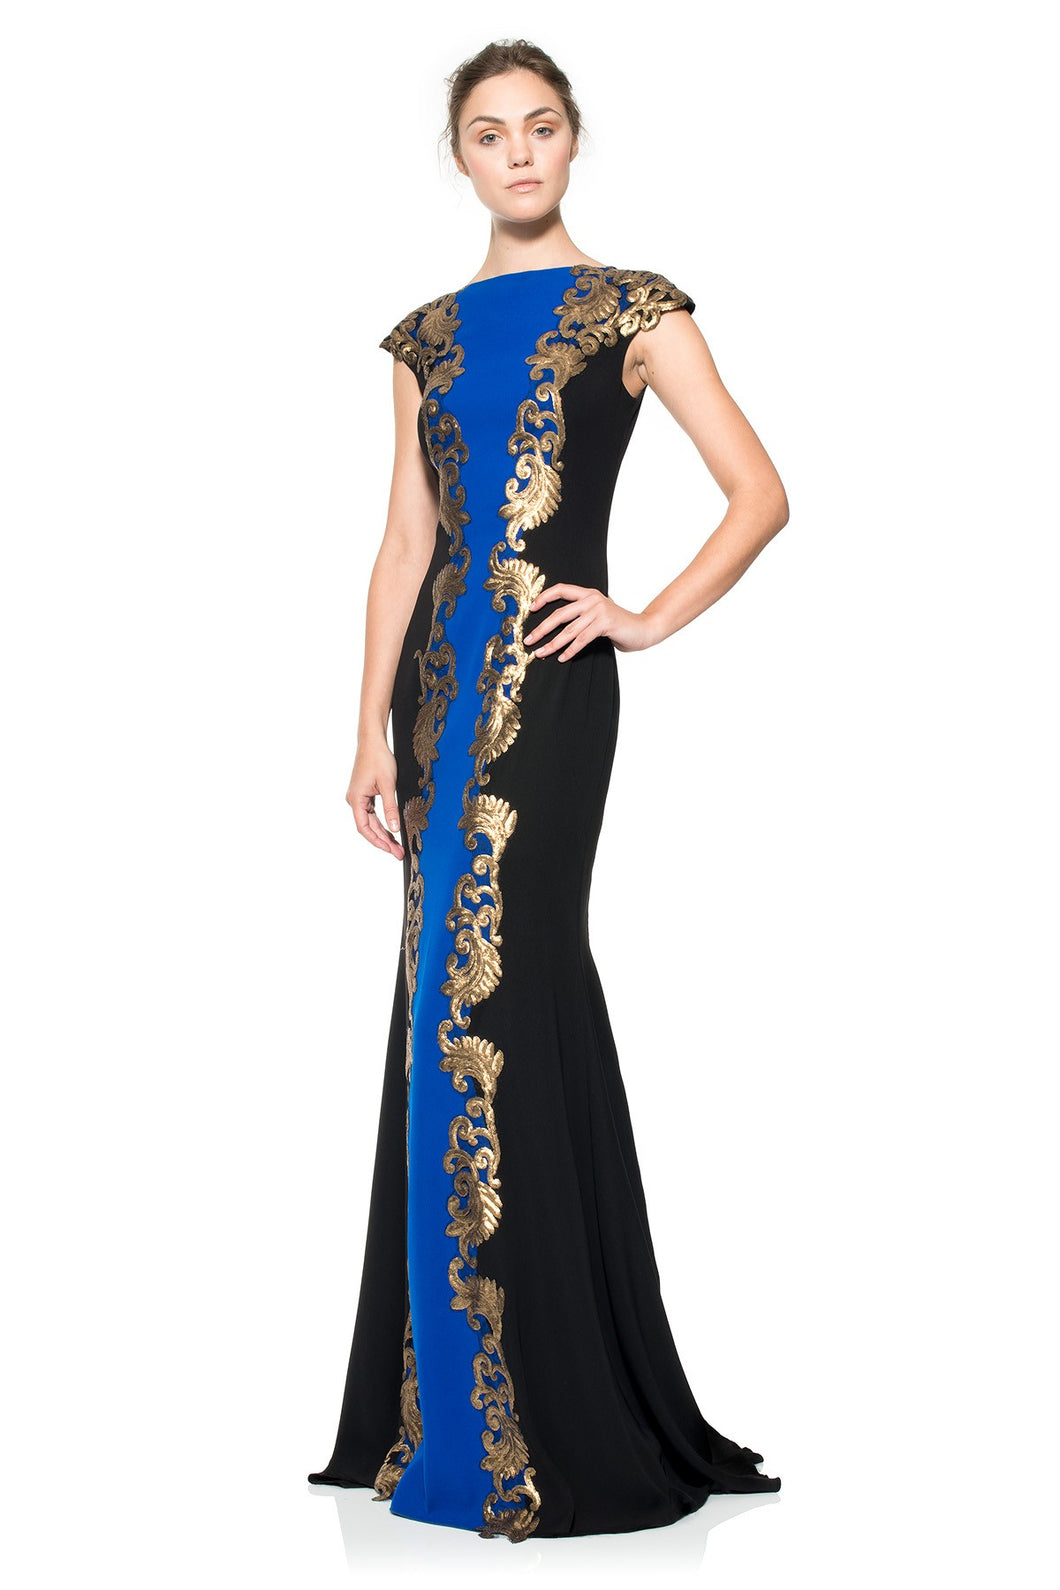 Tadashi Shoji Evening Gown Royal Blue/Black ALG1793LX, size 10